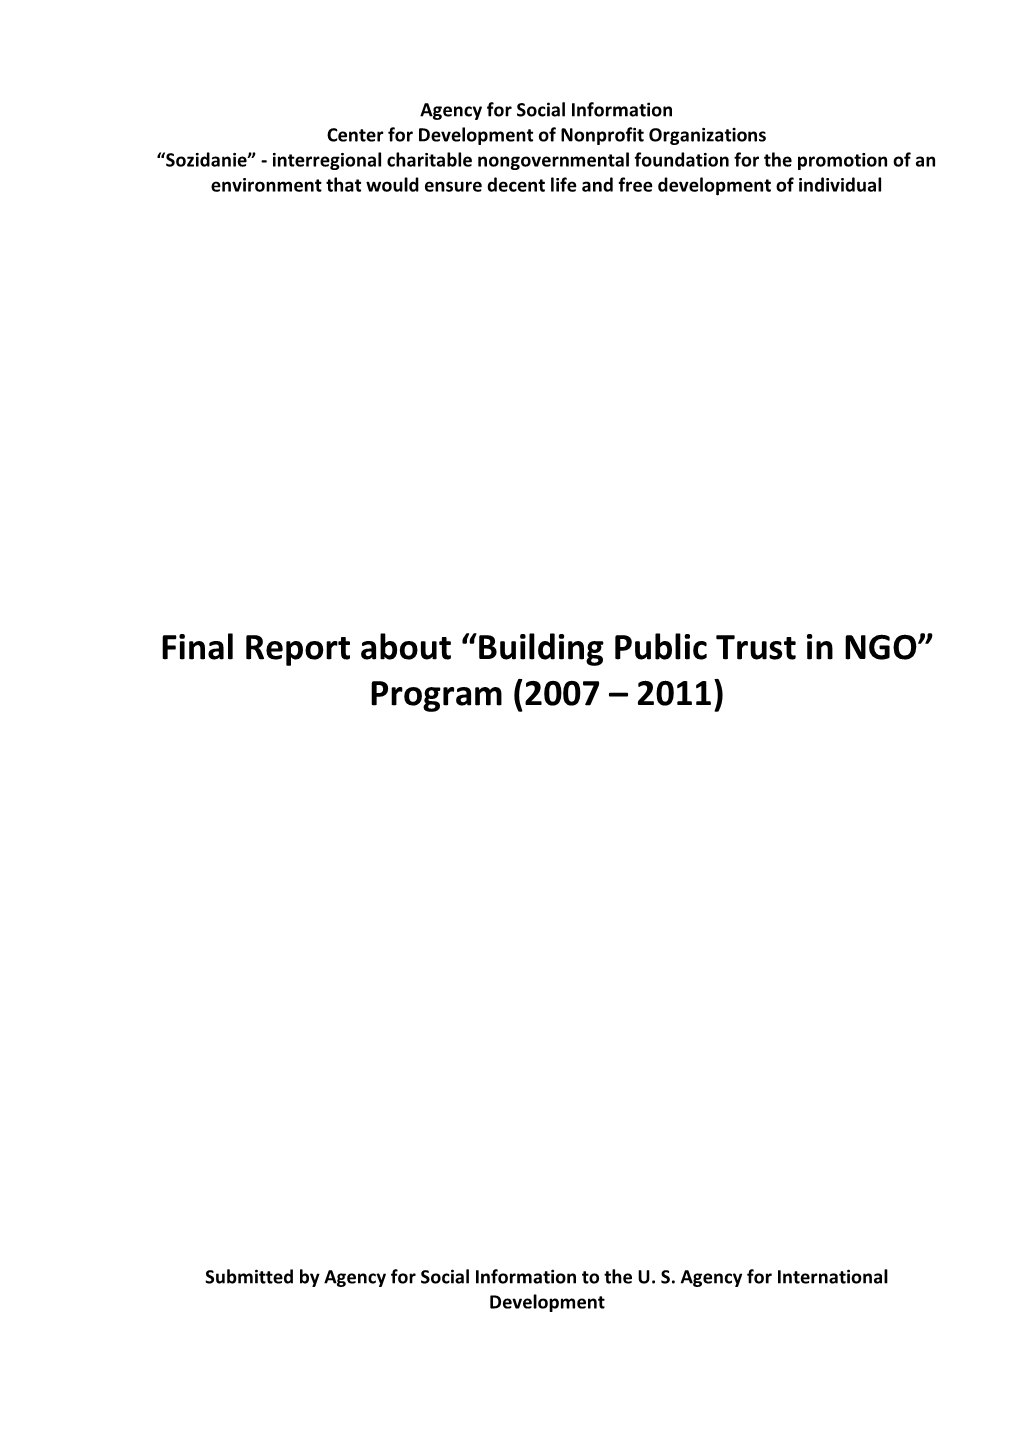 Building Public Trust in NGO” Program (2007 – 2011)